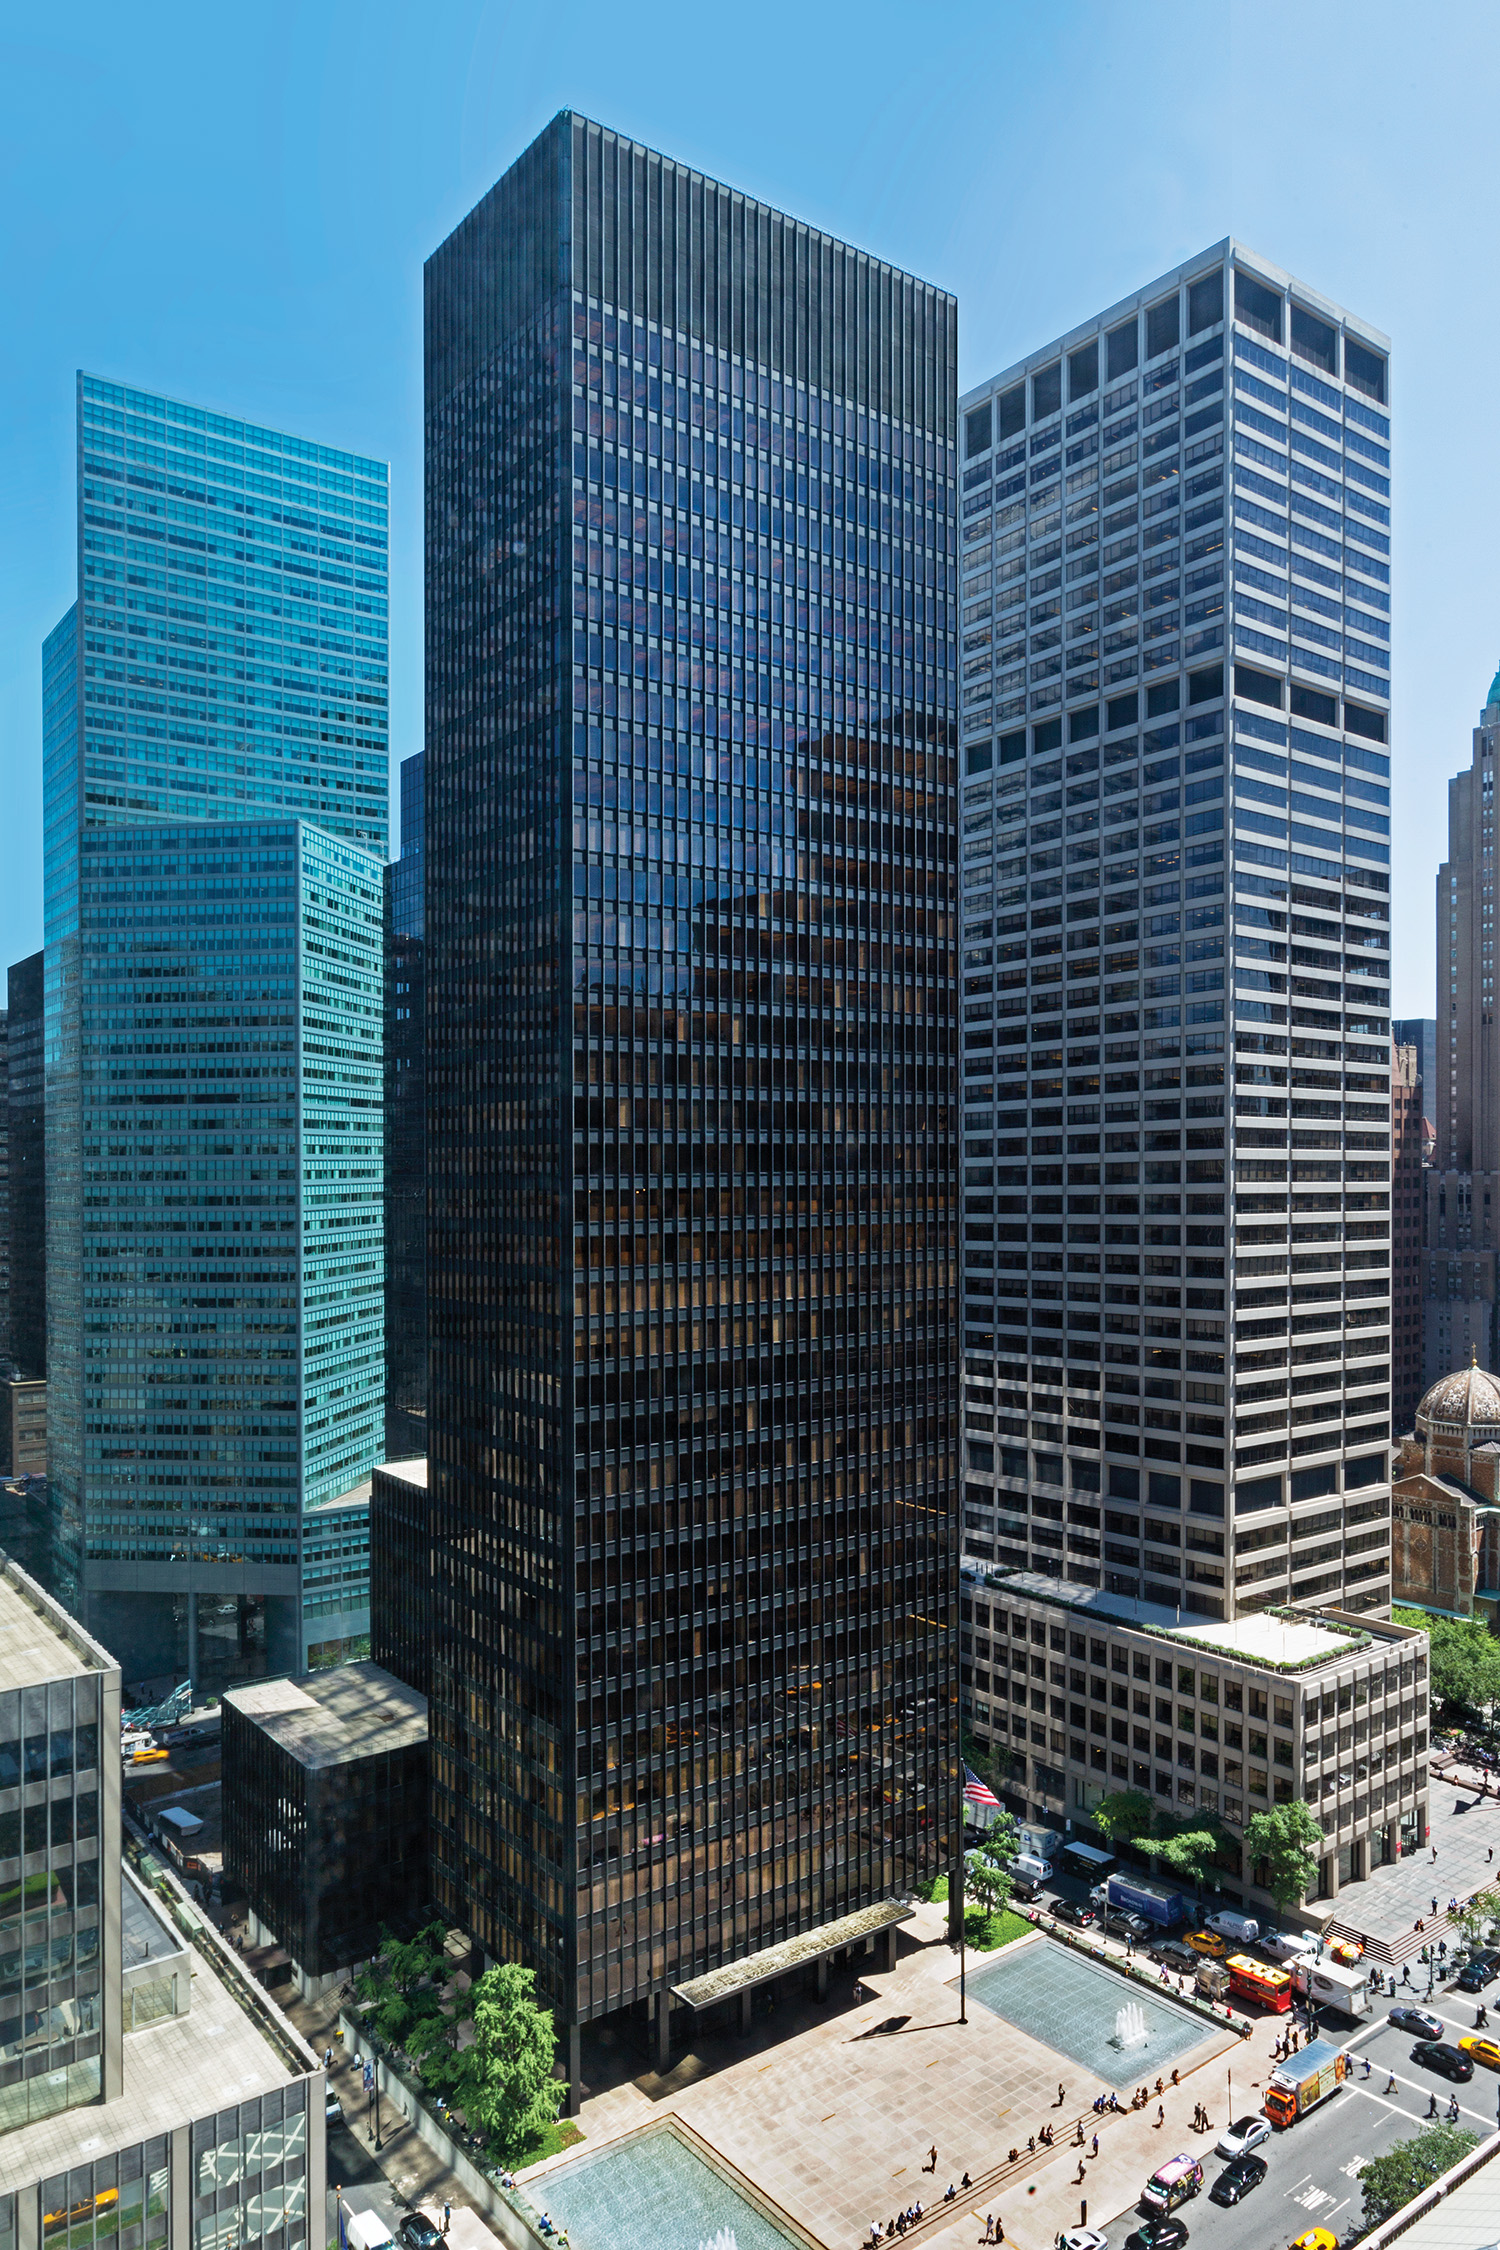 Seagram Building / New York NY / Mies van der Rohe